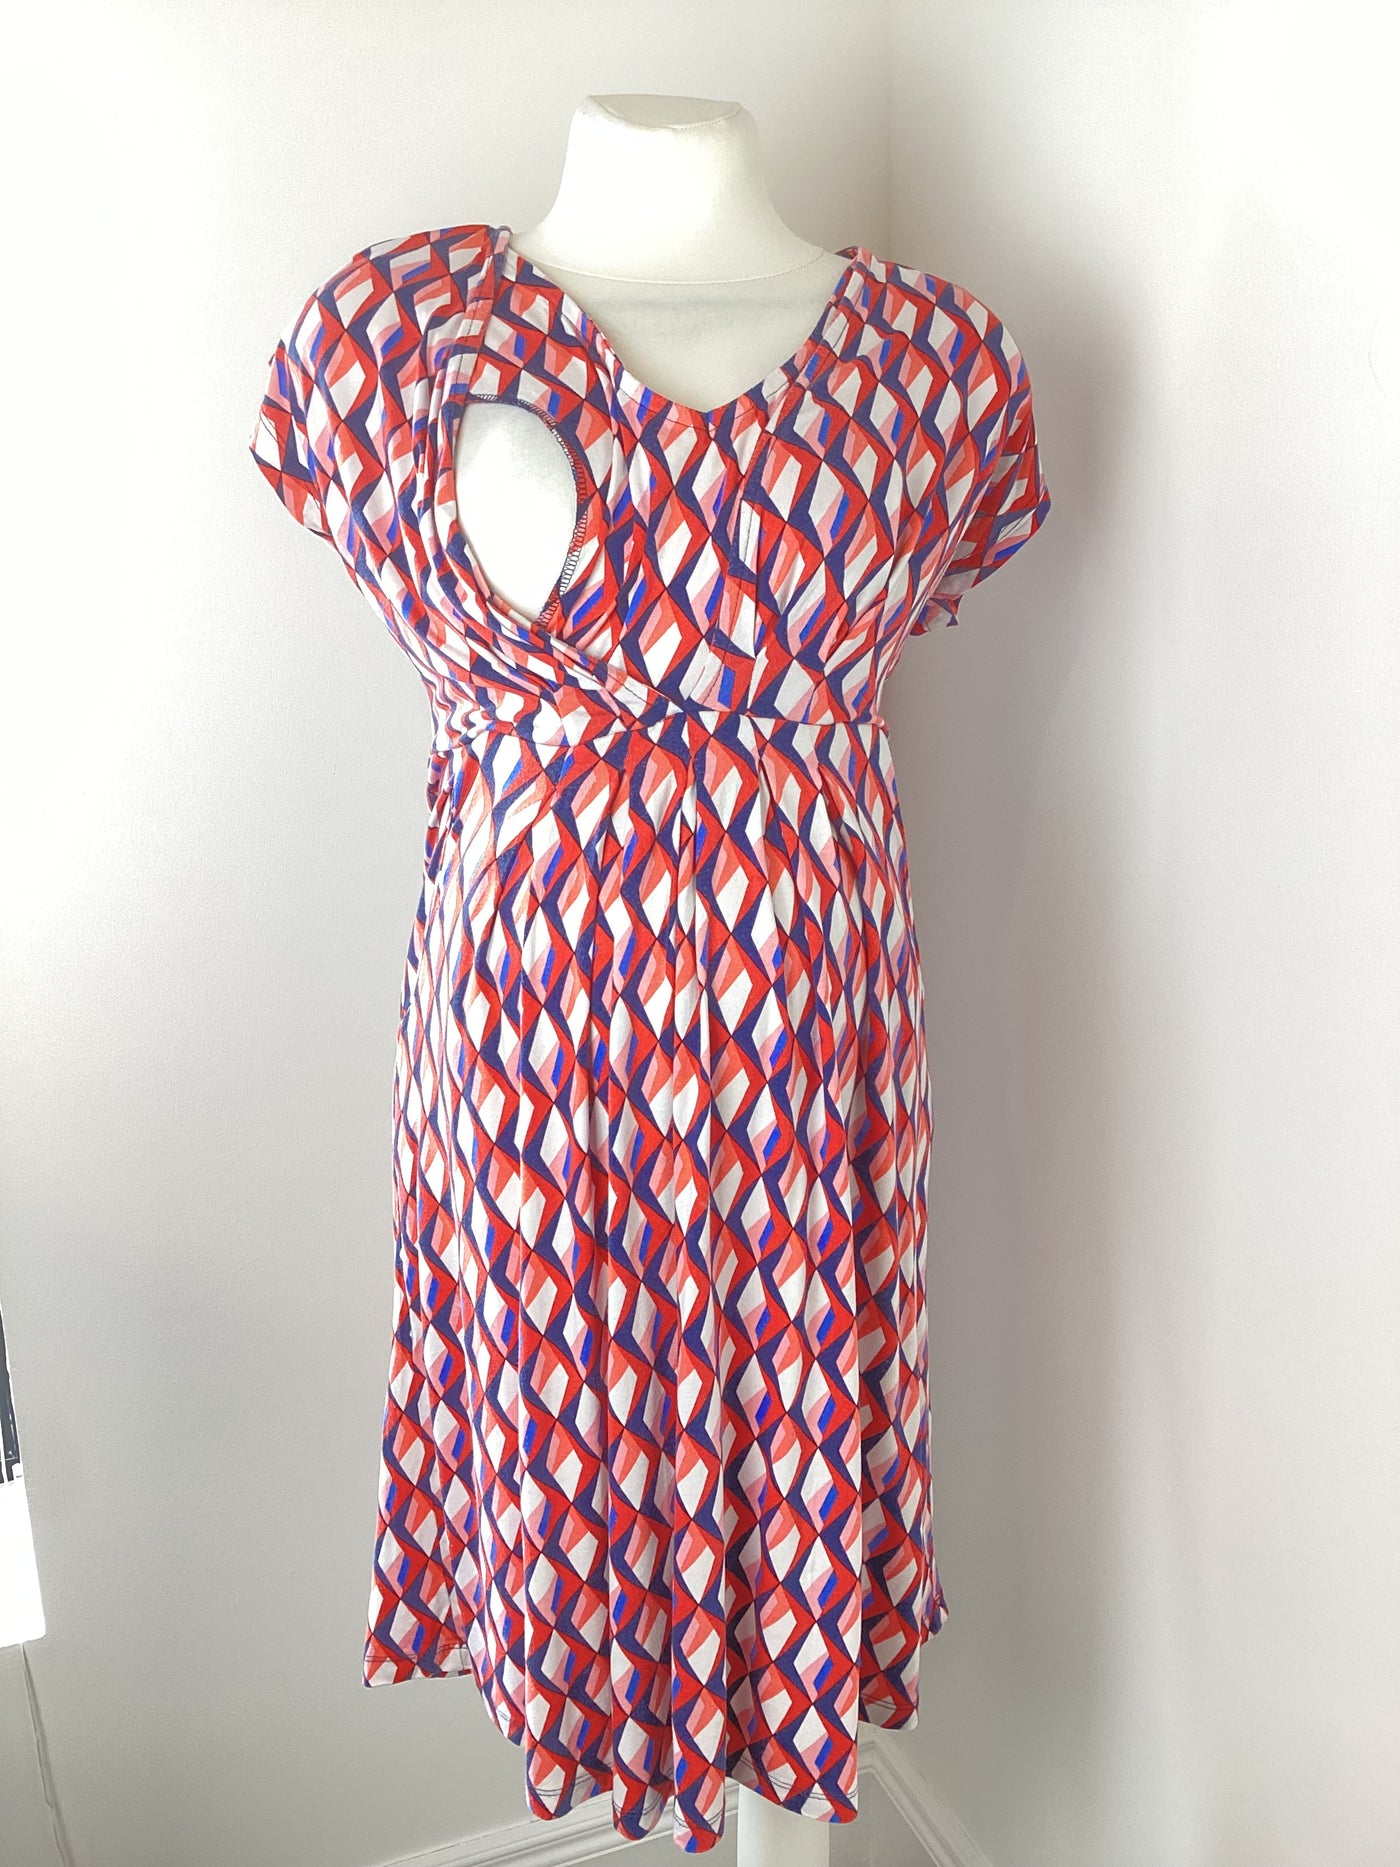 Jojo Maman Bebe red, white, orange & navy geometric maternity & nursing dress - Size S (Approx UK 8/10)